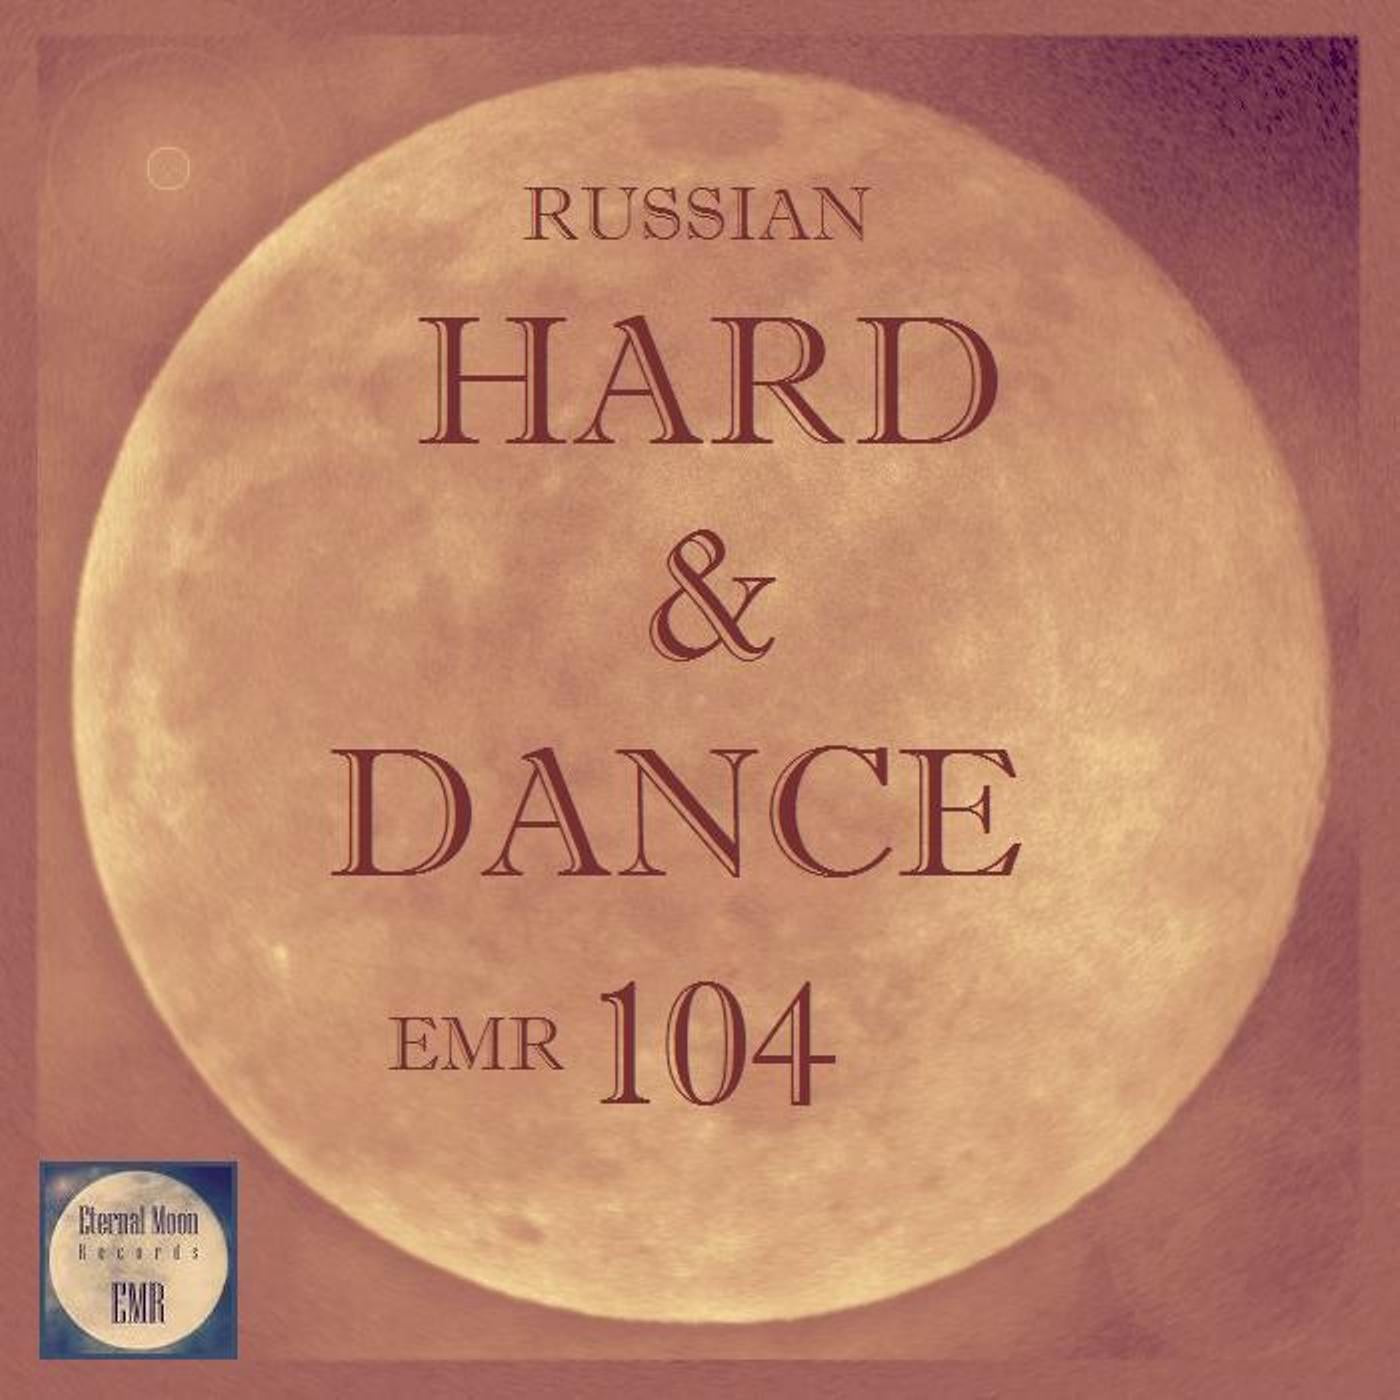 Russian Hard & Dance EMR Vol. 104